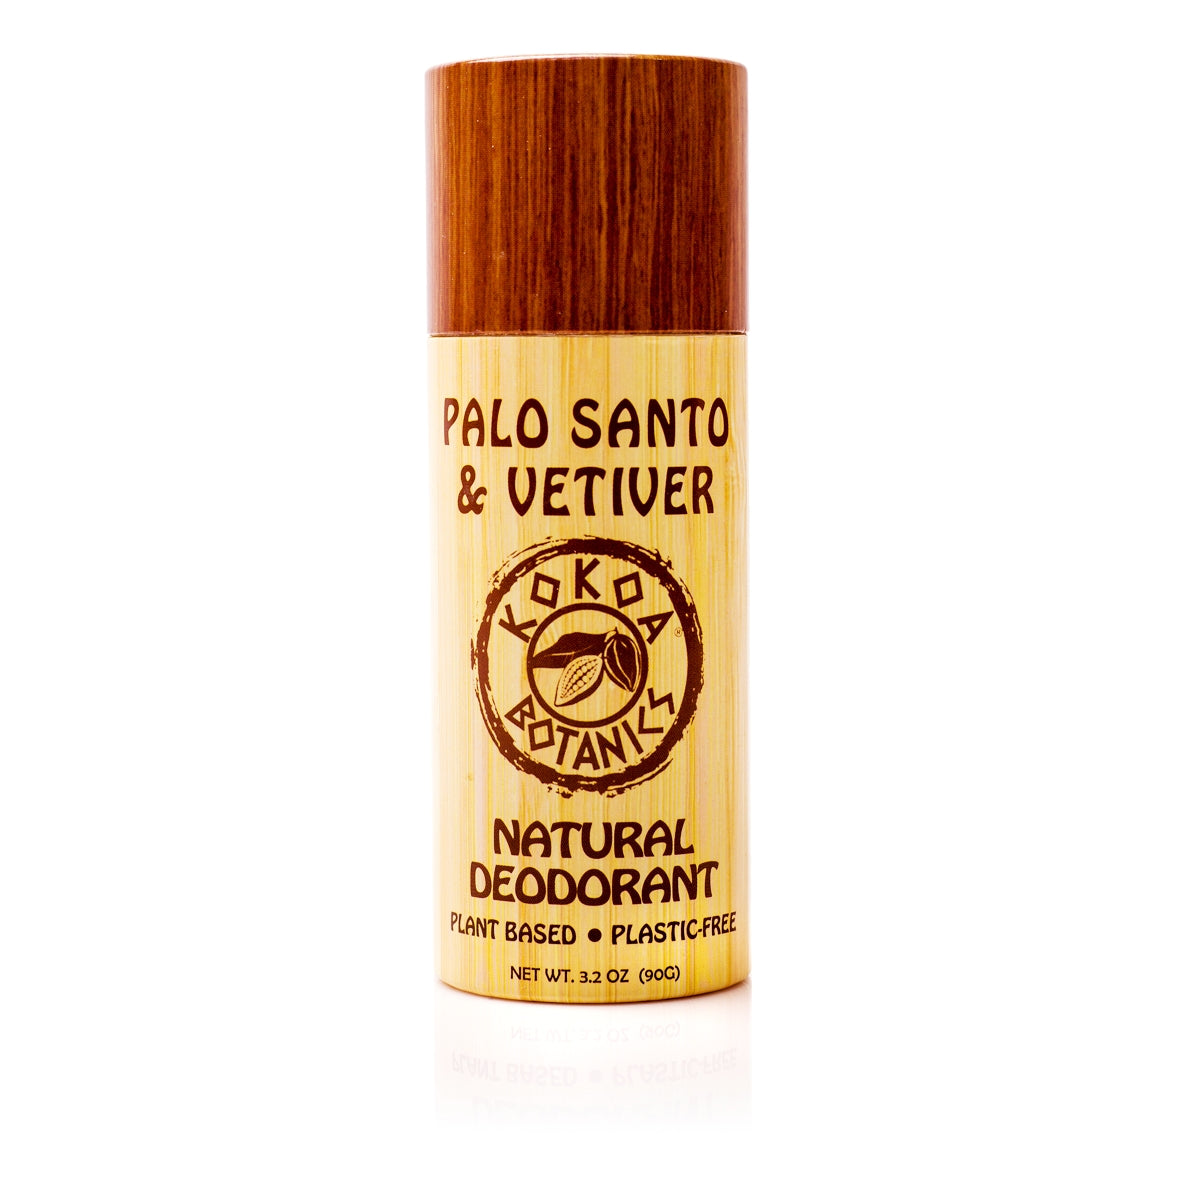 PALO SANTO & VETIVER - Natural Detox Deodorant - Sport - Plastic-Free - Aluminum-Free 3.2 oz